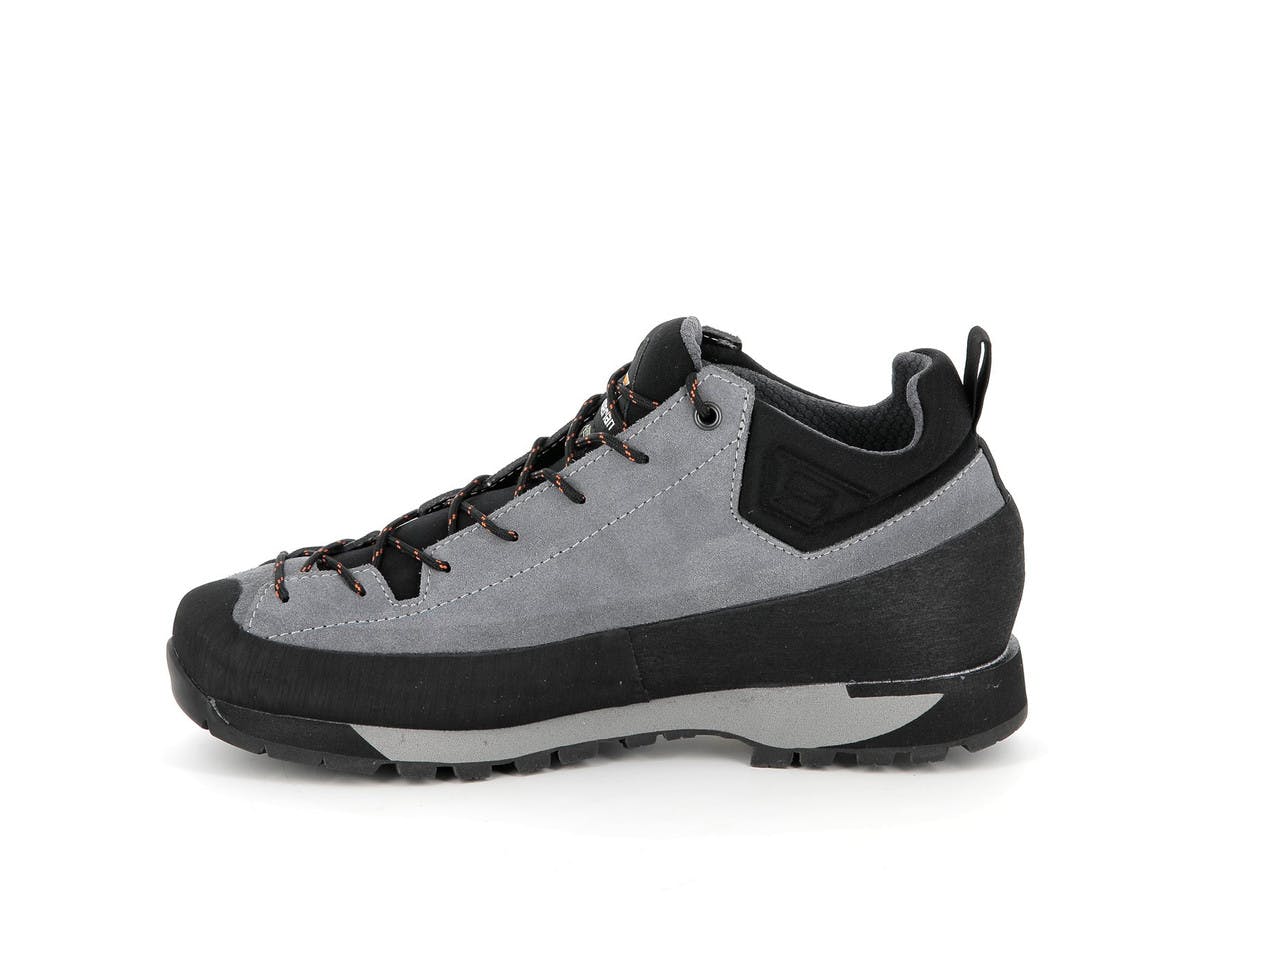 215 Salathe Gore-Tex RR Hiking Shoes Dark Grey